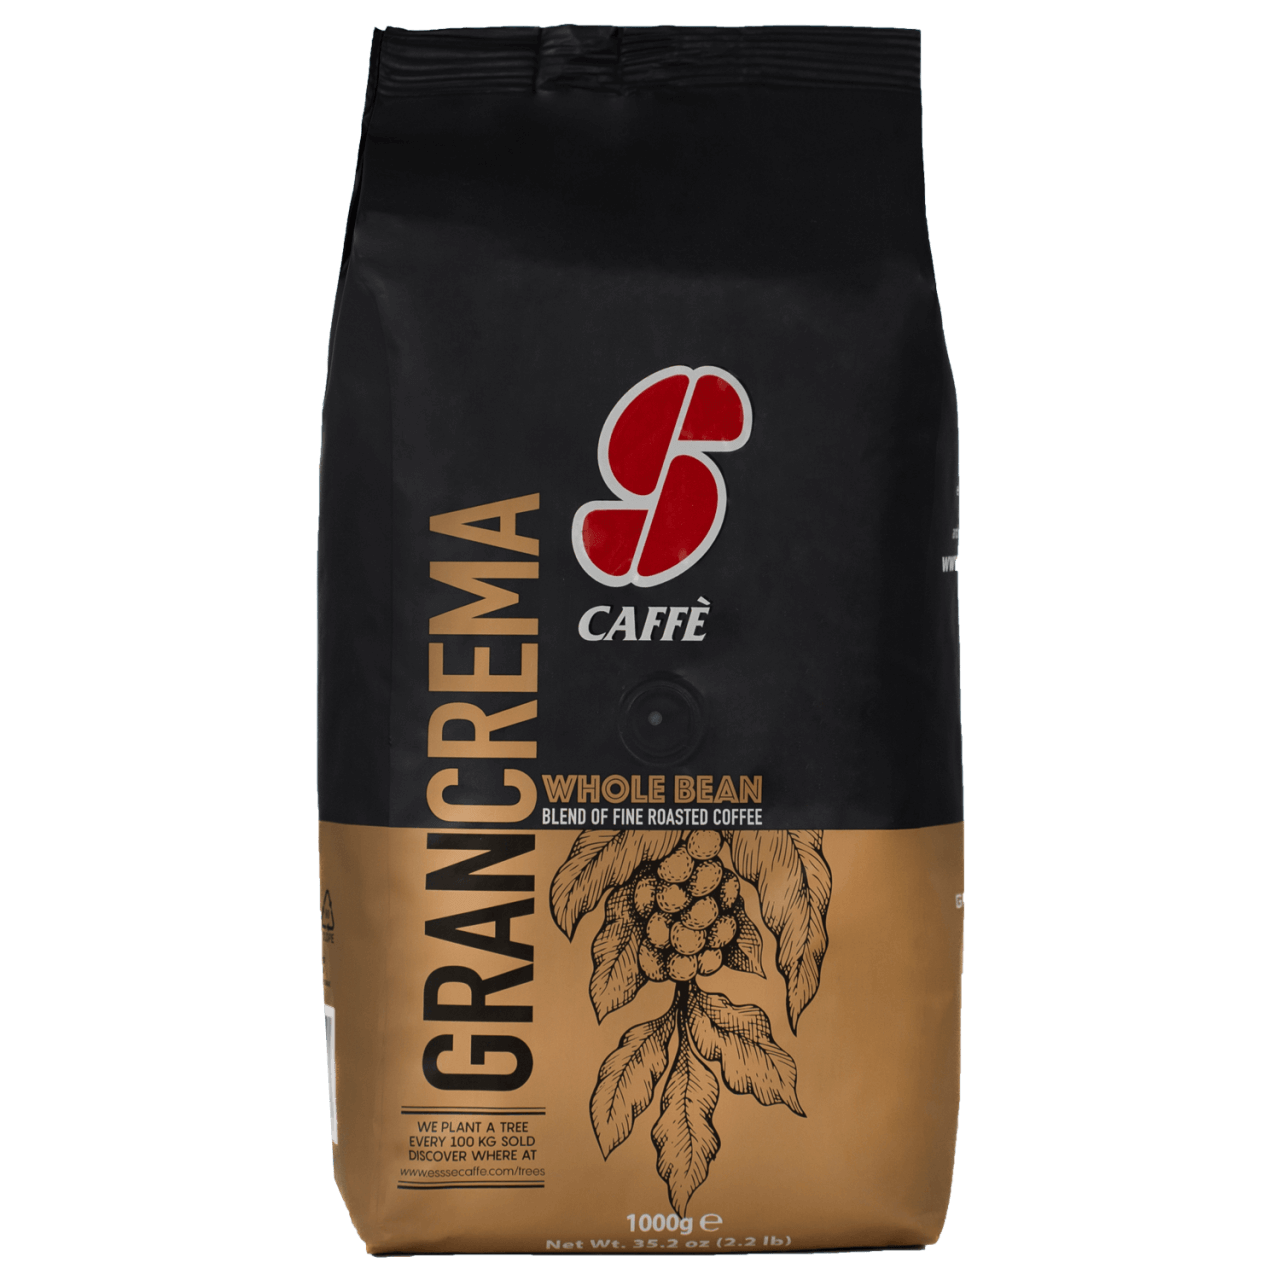 Essse Caffe Gran Crema 1kg Bohnen